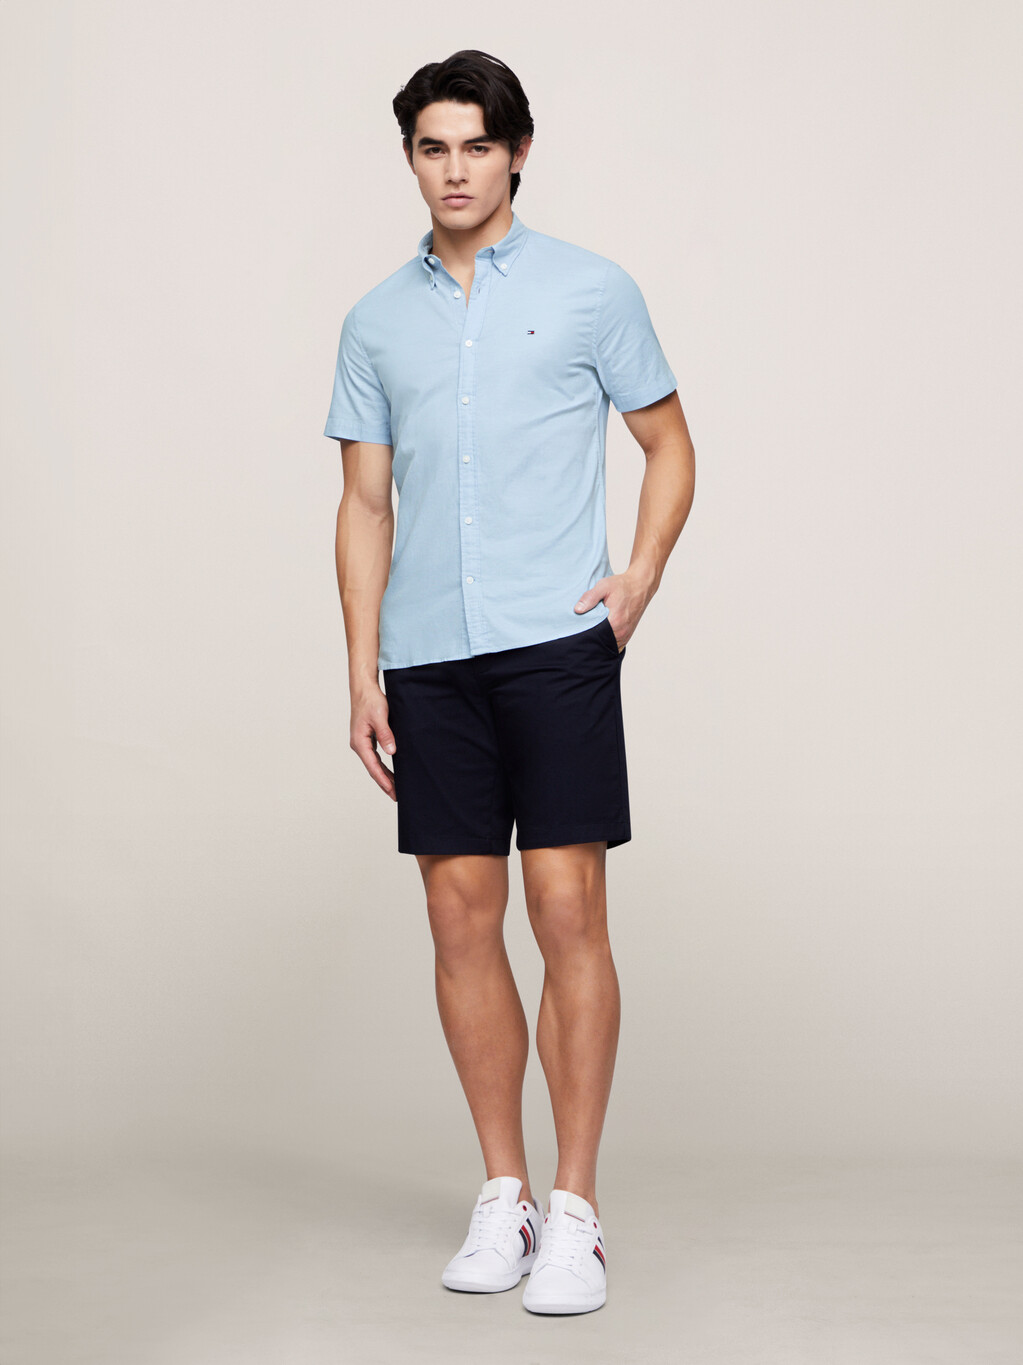 Essential Short Sleeve Shirt, Cloudy Blue, hi-res